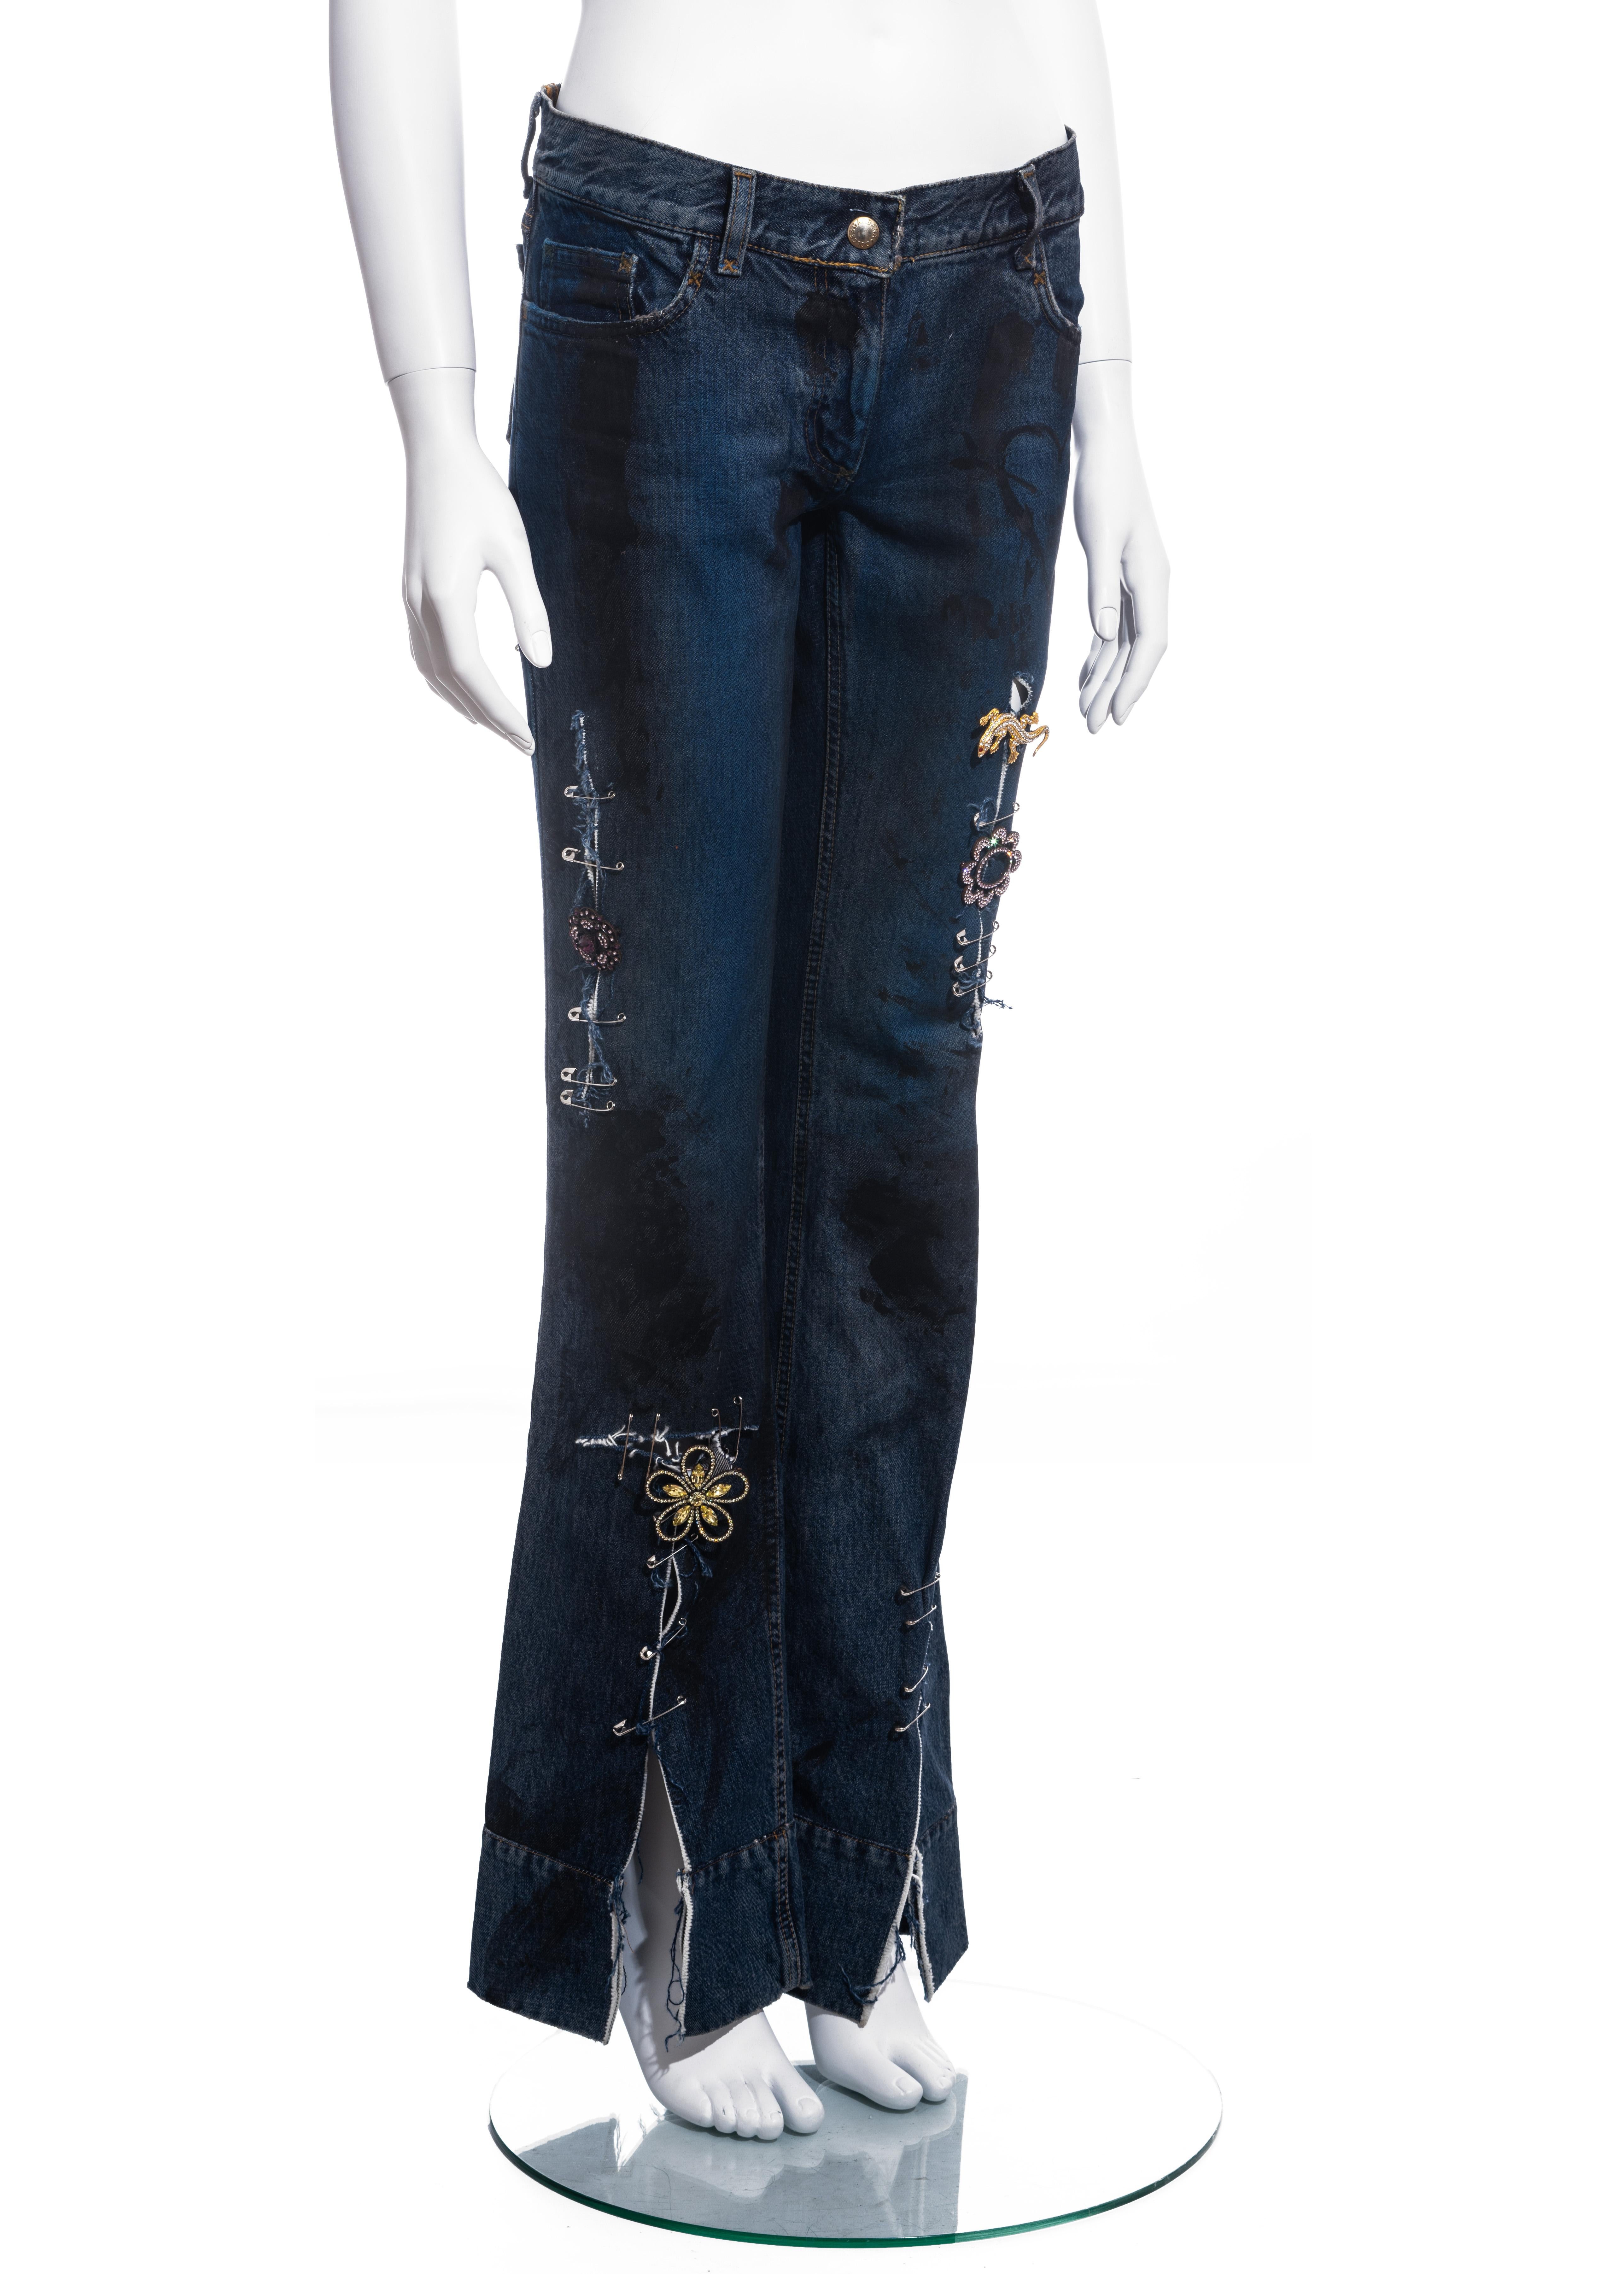 Black Dolce & Gabbana indigo denim graffiti punk jeans with safety pins, ss 2001